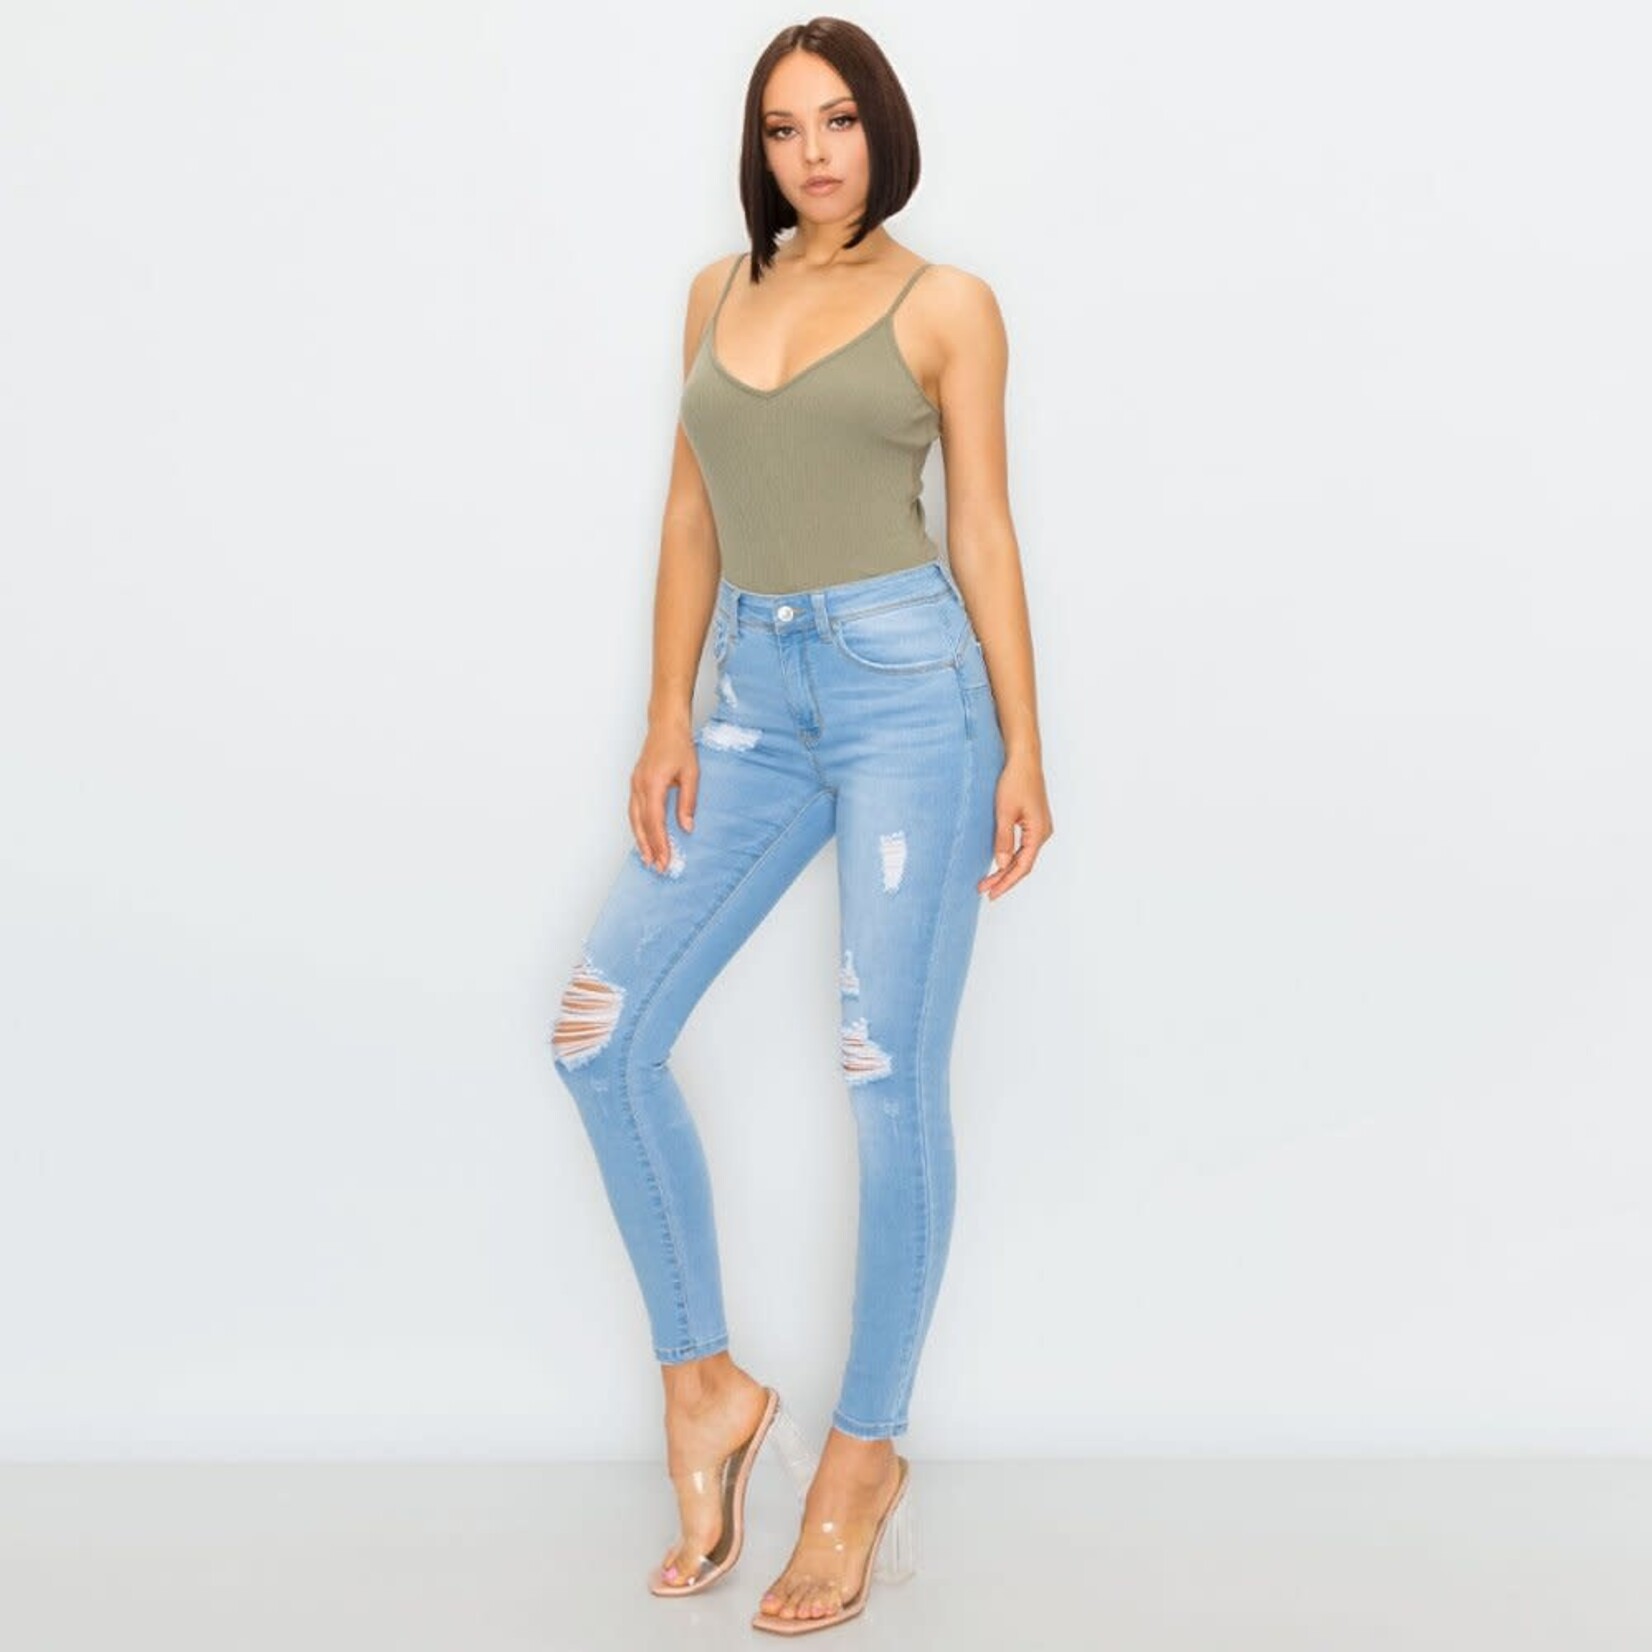 Wax Jeans Wax Jeans - Women’s Push-up Destructed Basic Skinny Jean - 90240